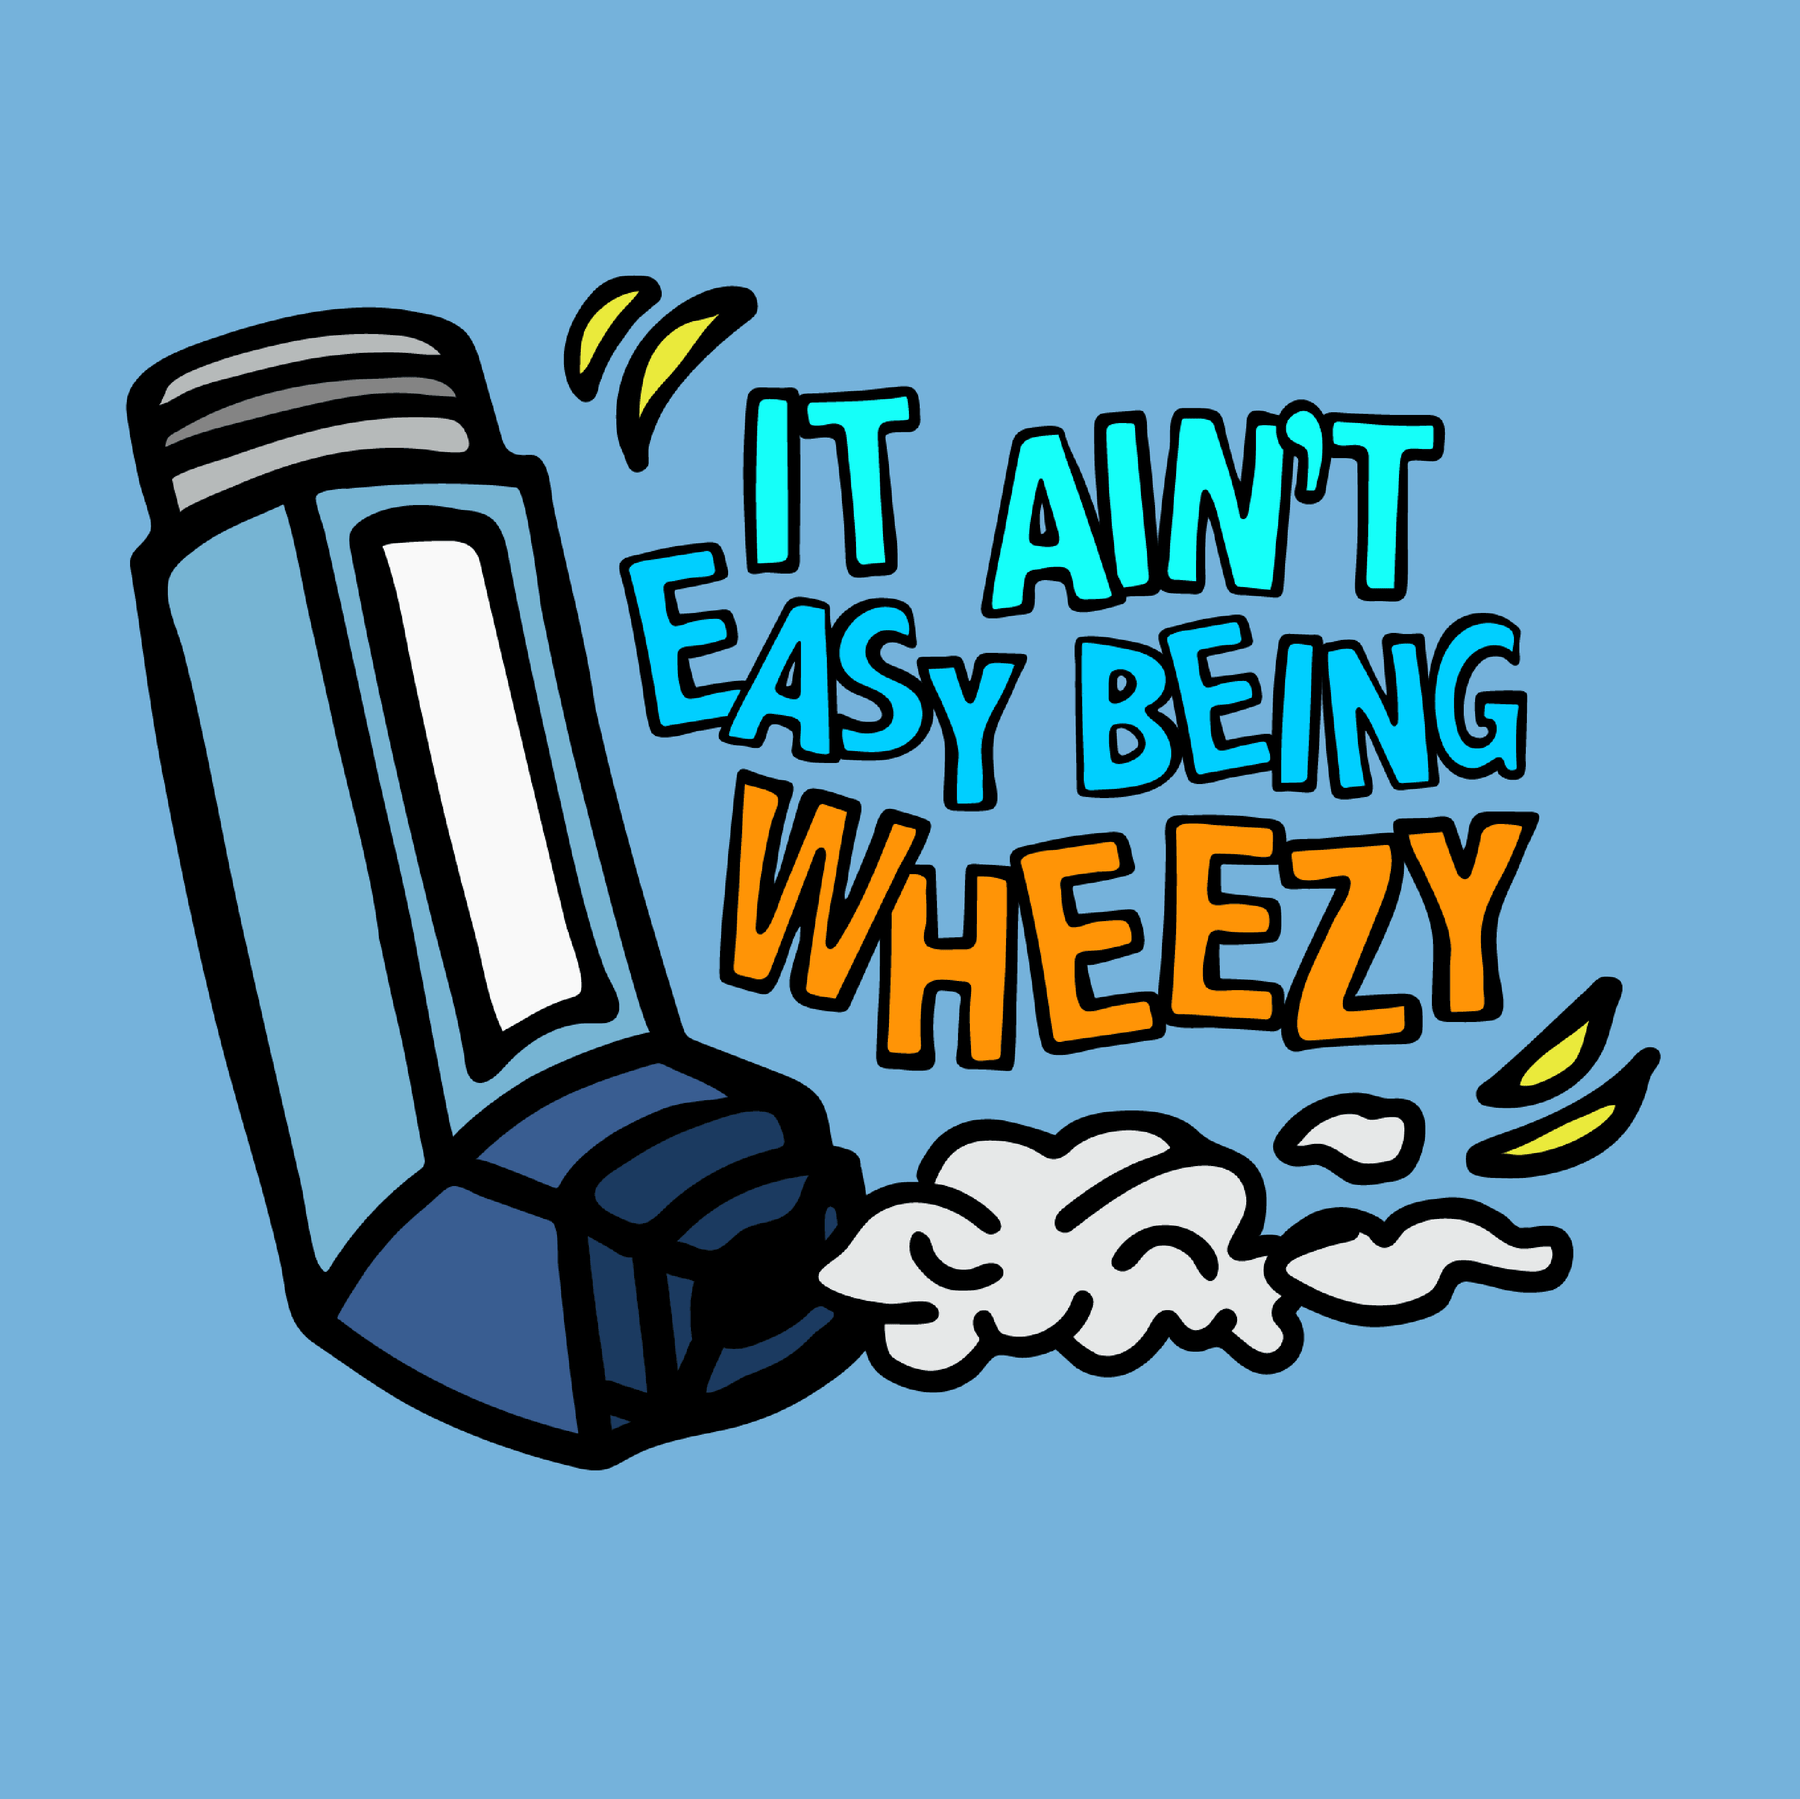 It Ain’t Easy Being Wheezy 😫💨 – Men's T Shirt